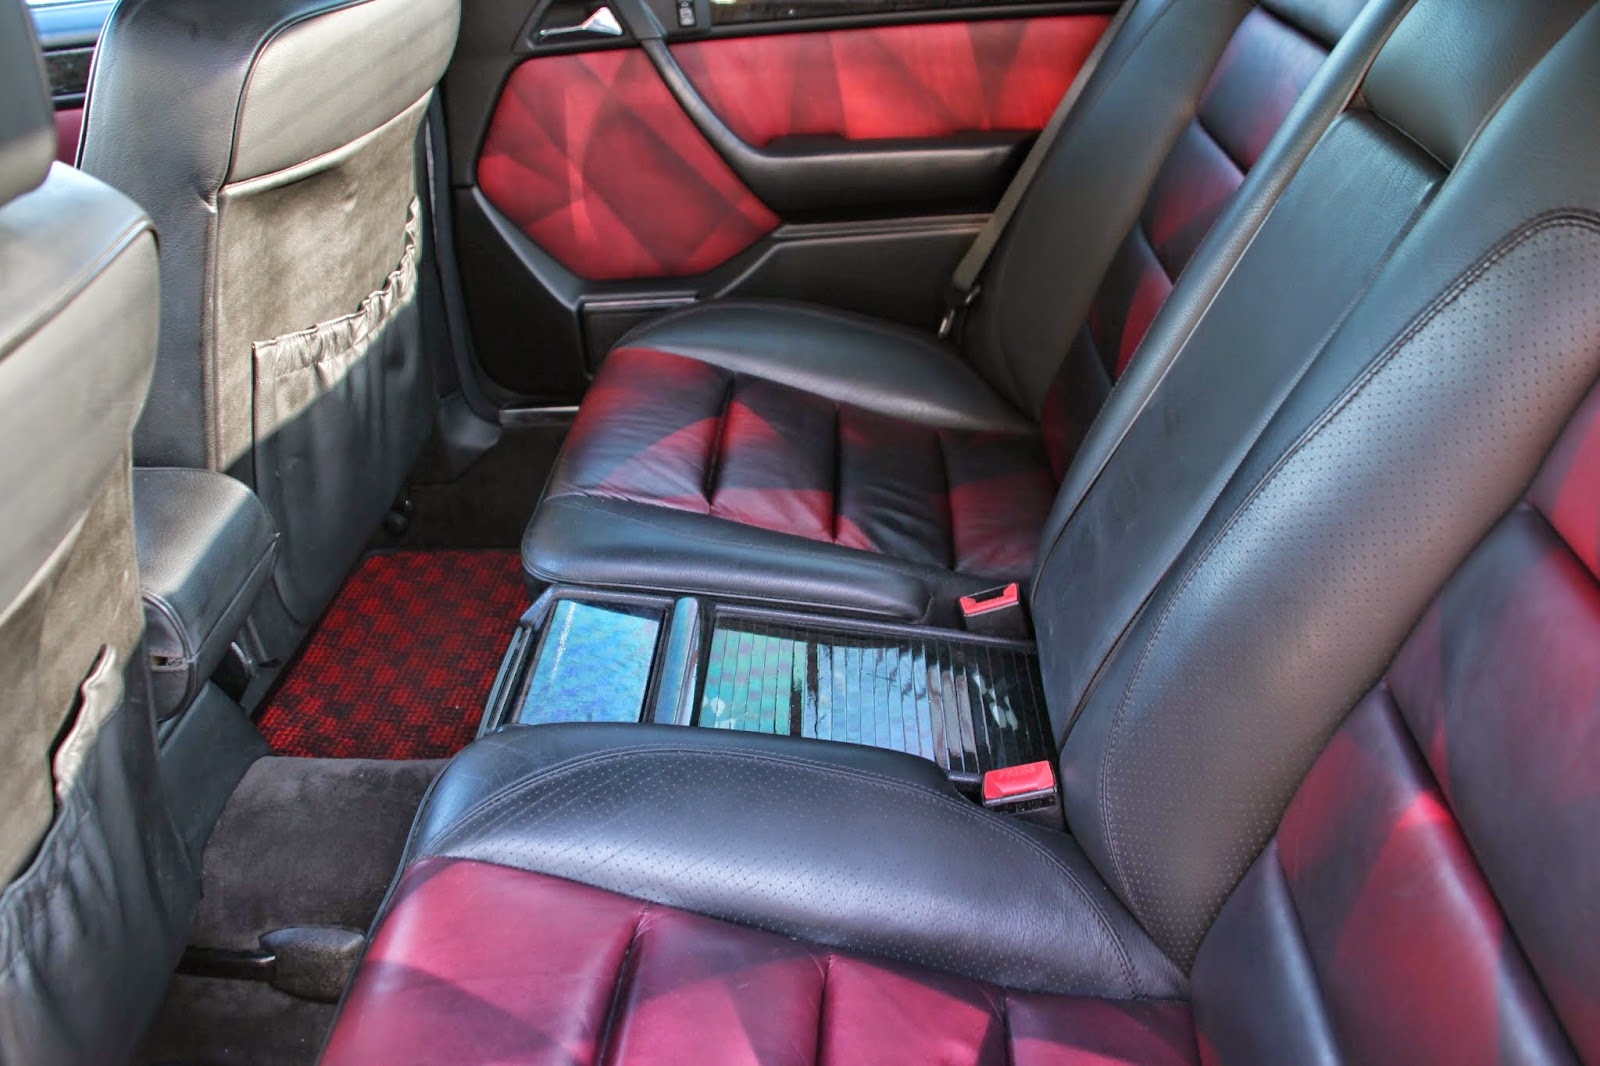 w124 interior limited edition